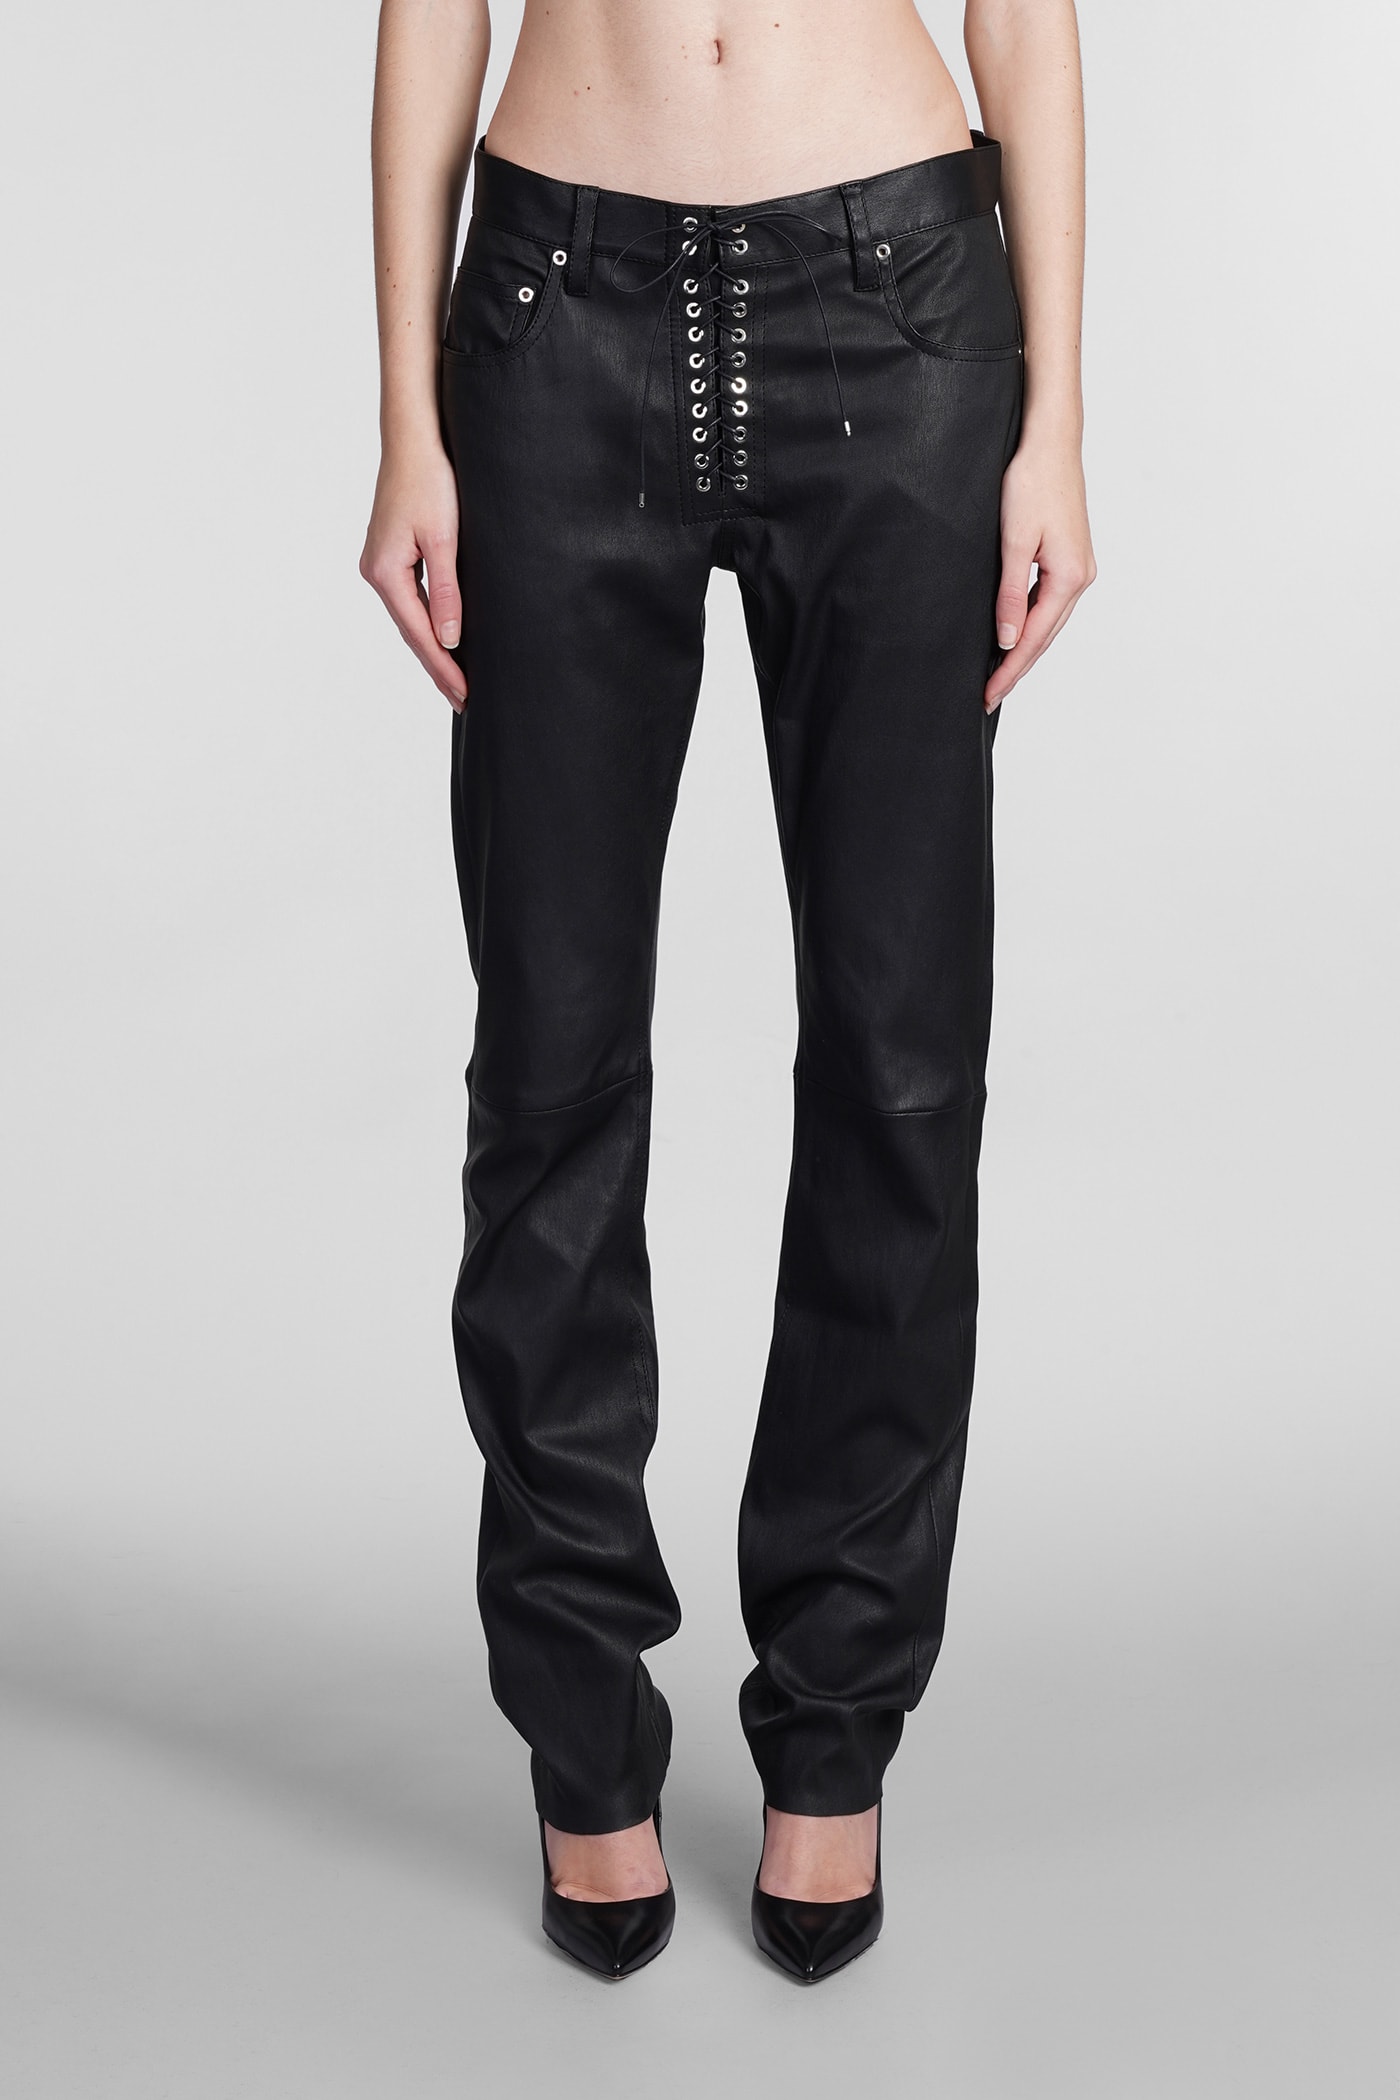 Ludovic de Saint Sernin Pants In Black Leather